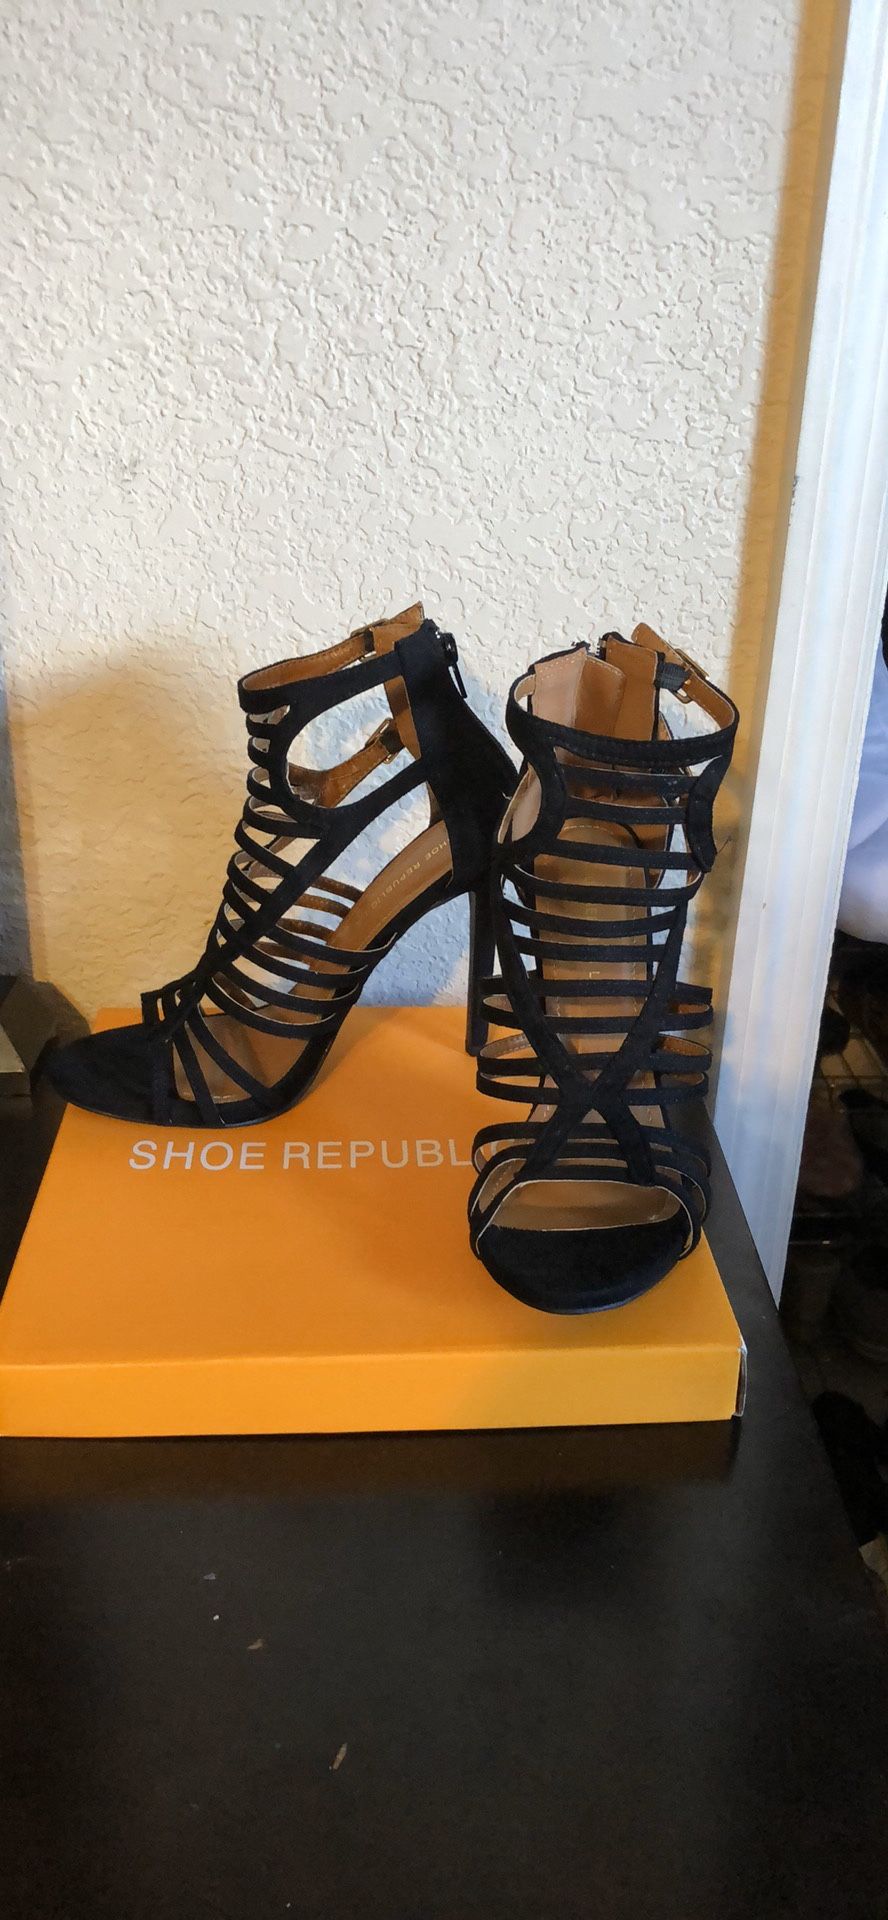 Black heels size 7.5